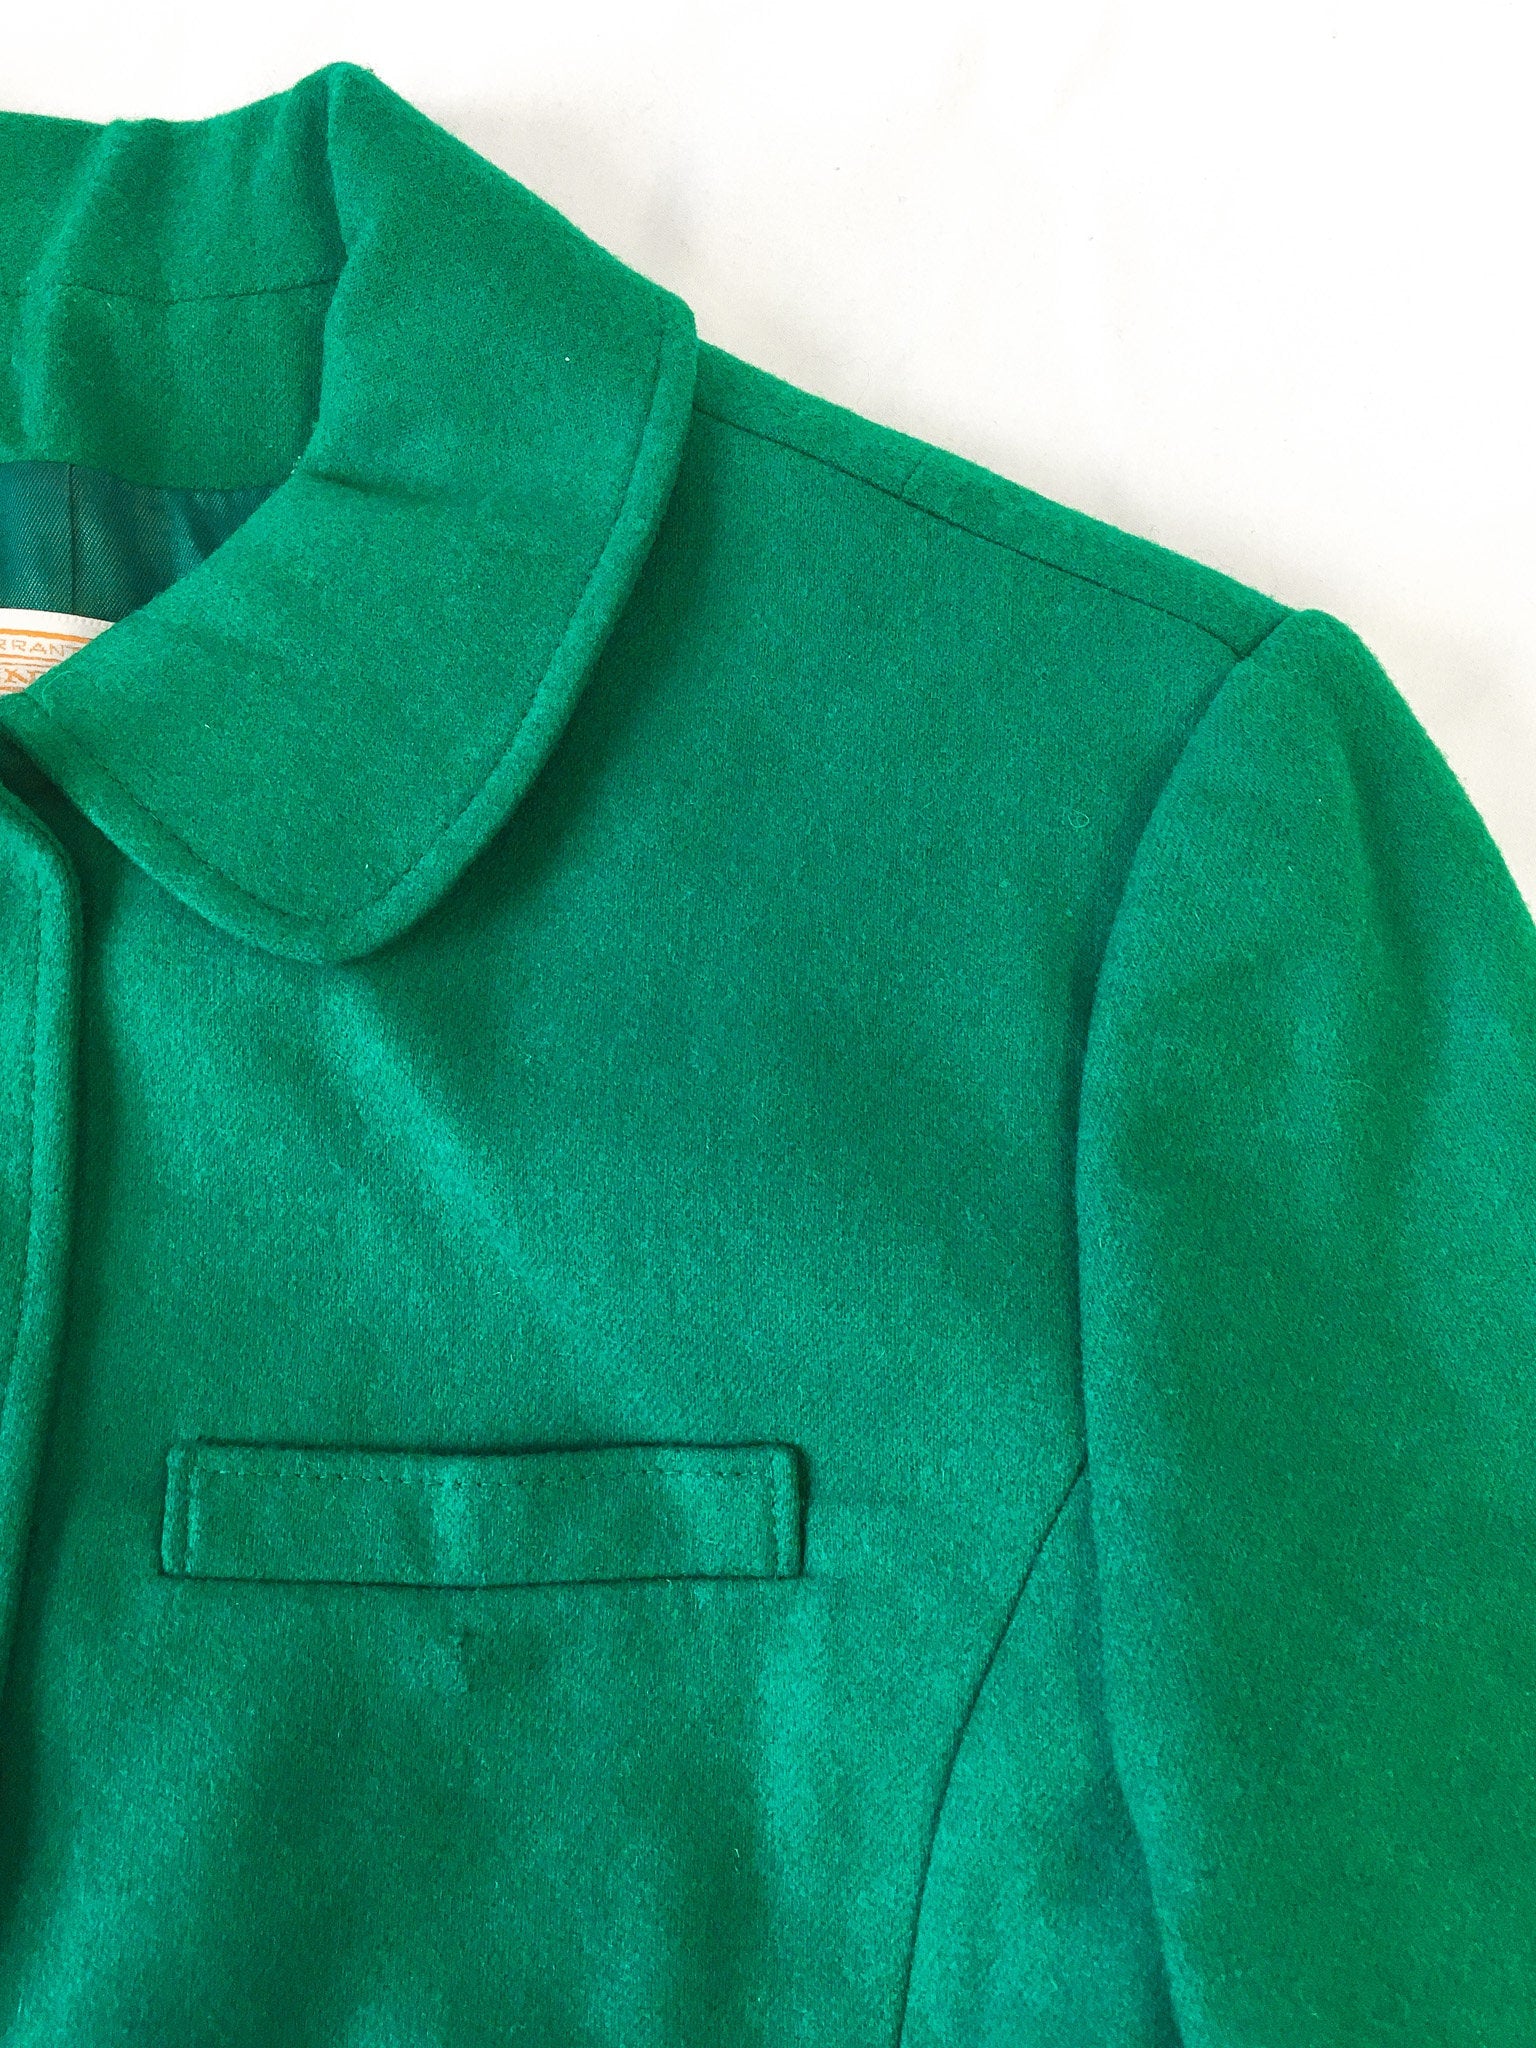 Vintage 90s Pendleton Wool Green Blazer, 1990s 100% Pure Wool Blazer